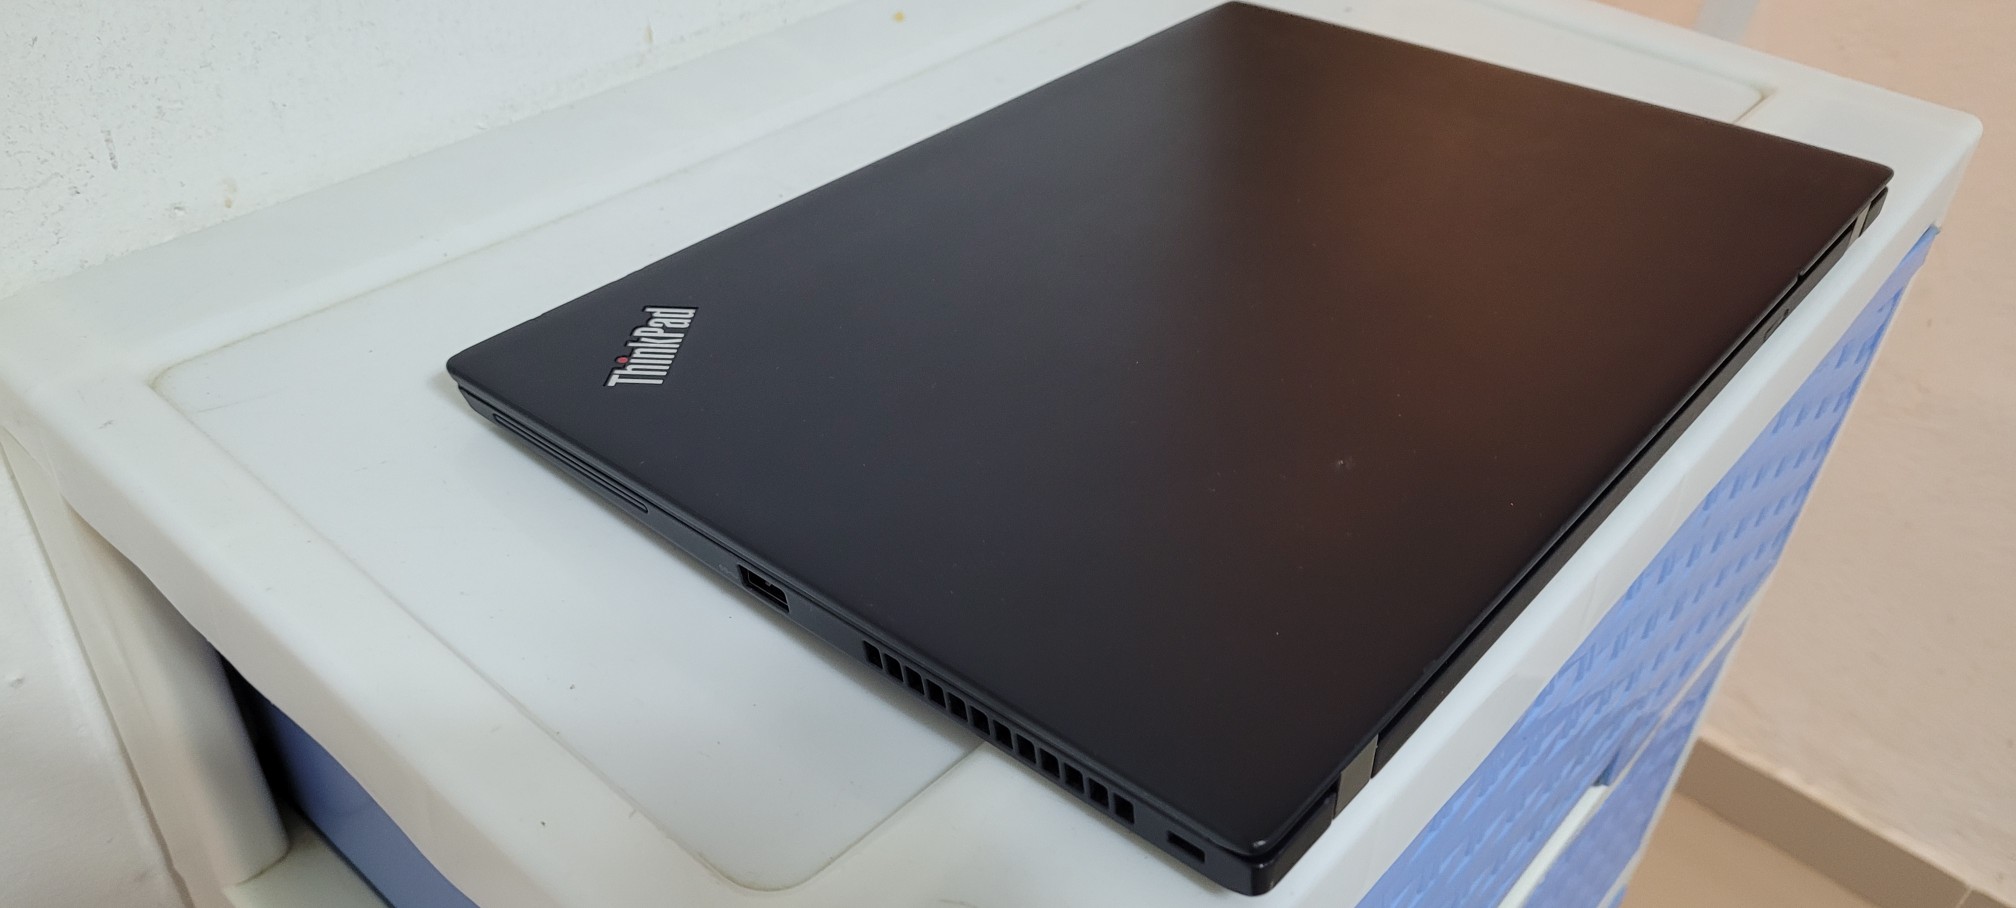 computadoras y laptops - laptop lenovo T480 14 Pulg Core i5 8va Ram 8gb ddr4 Disco 256gb SSD Solido 2